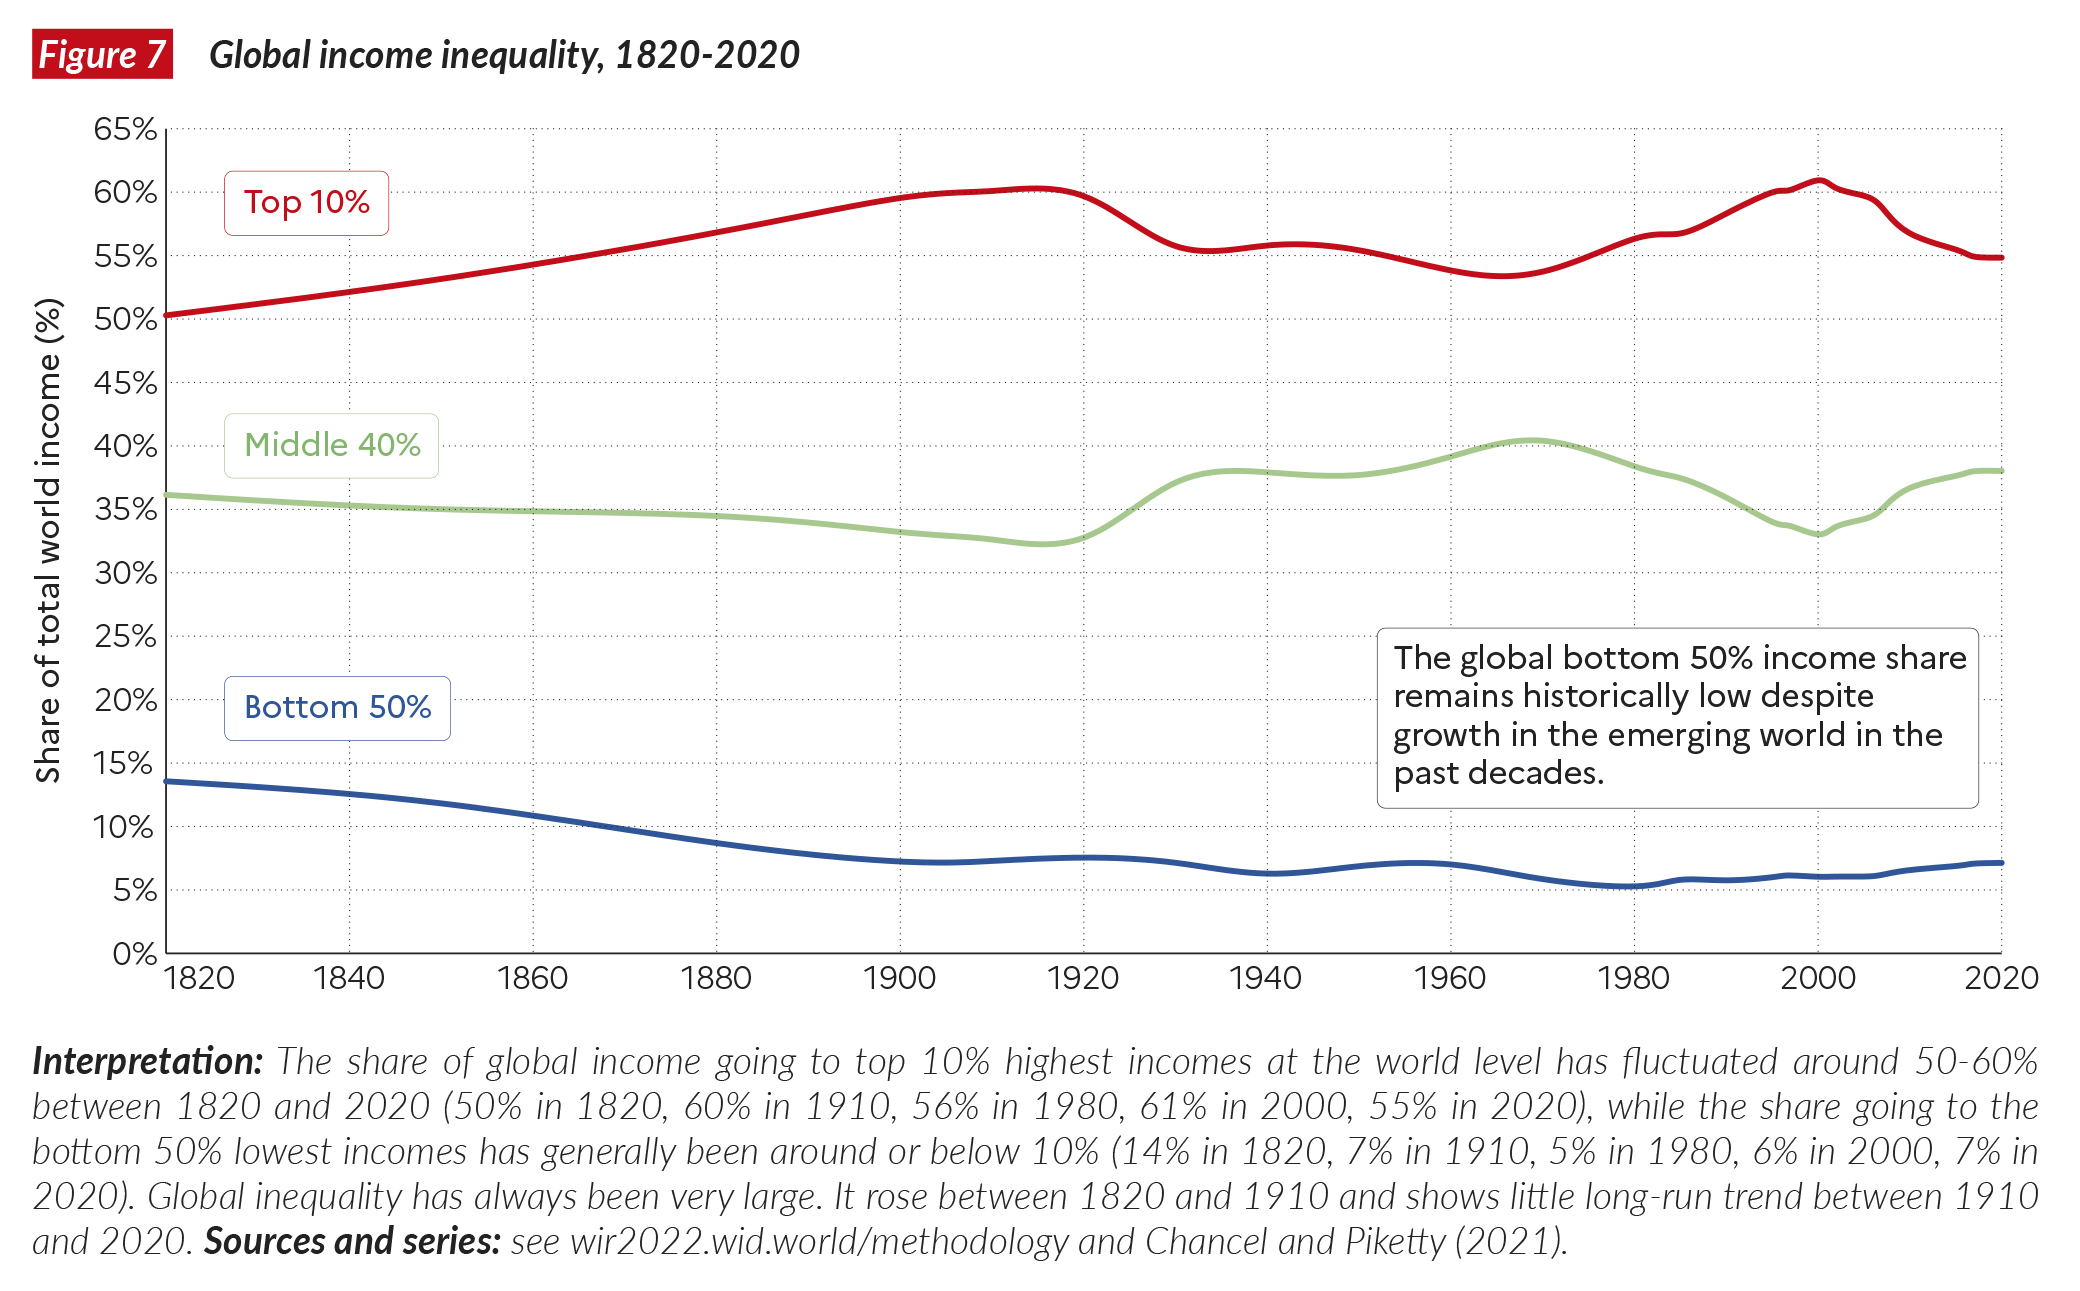 F7. Global income inequality 1820-2020